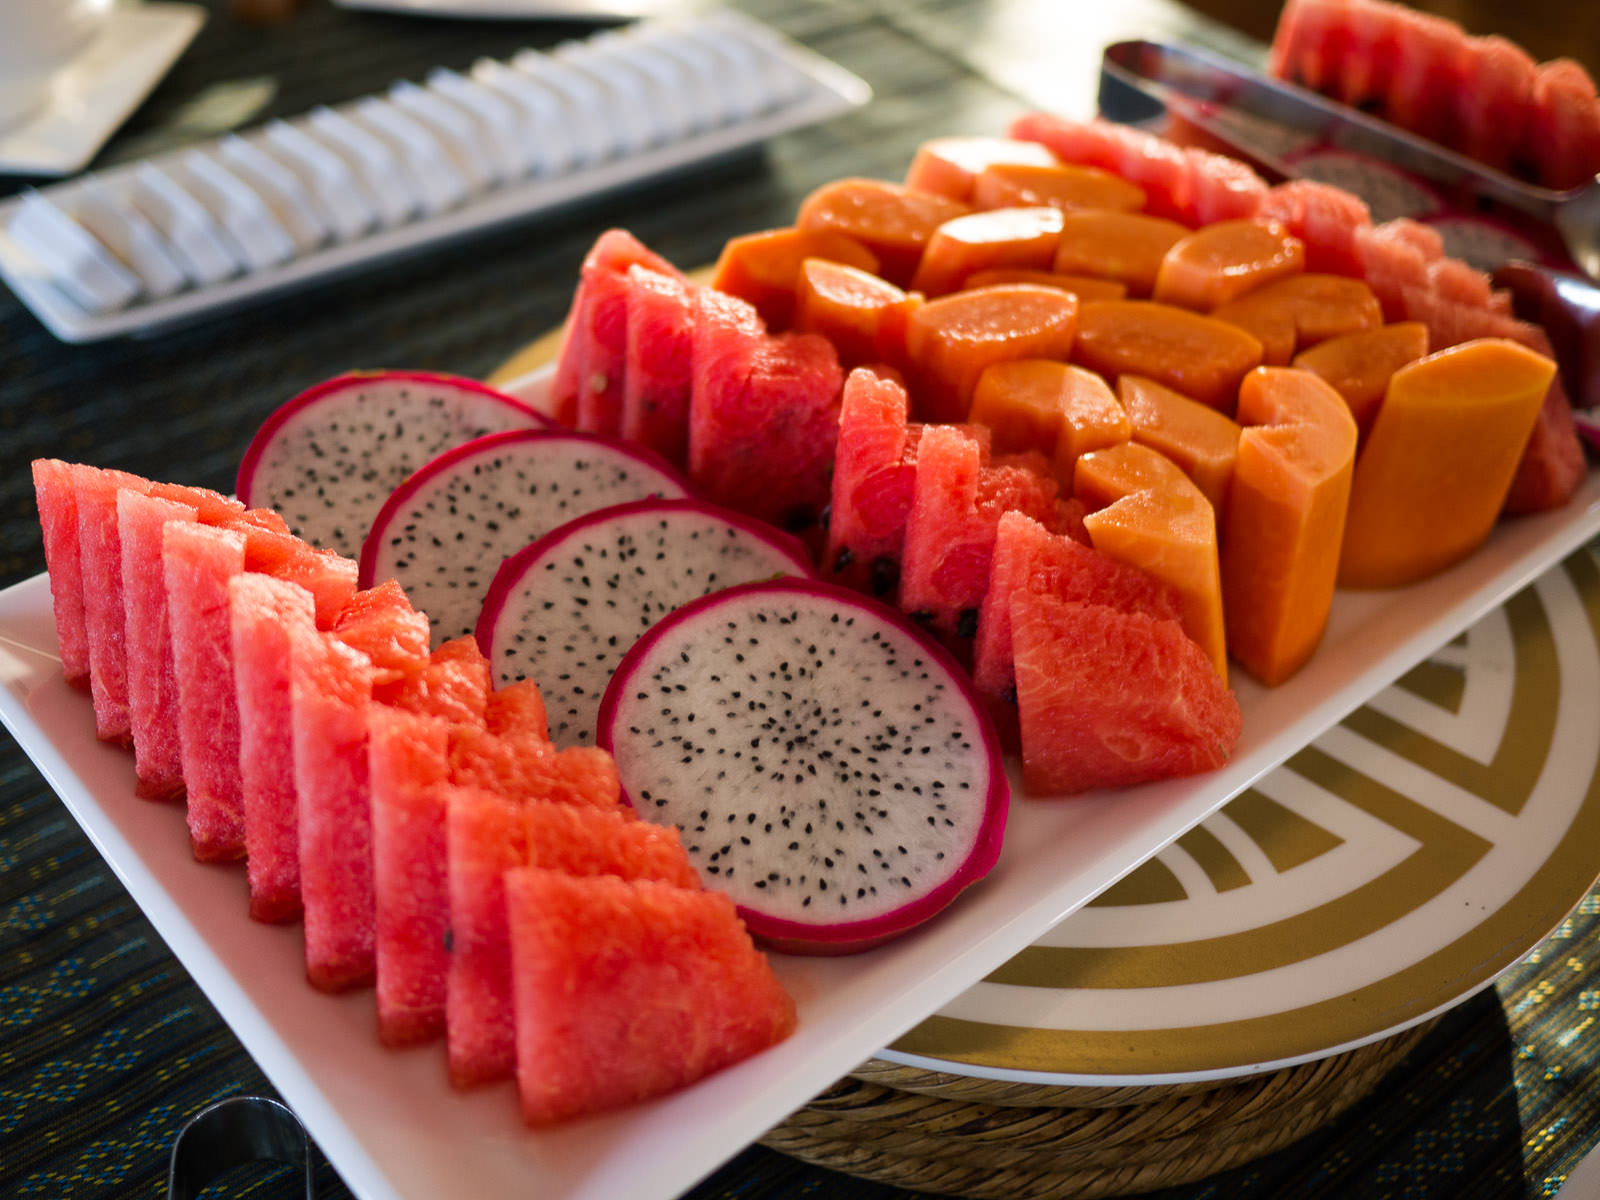 Watermelon, dragon fruit and papaya